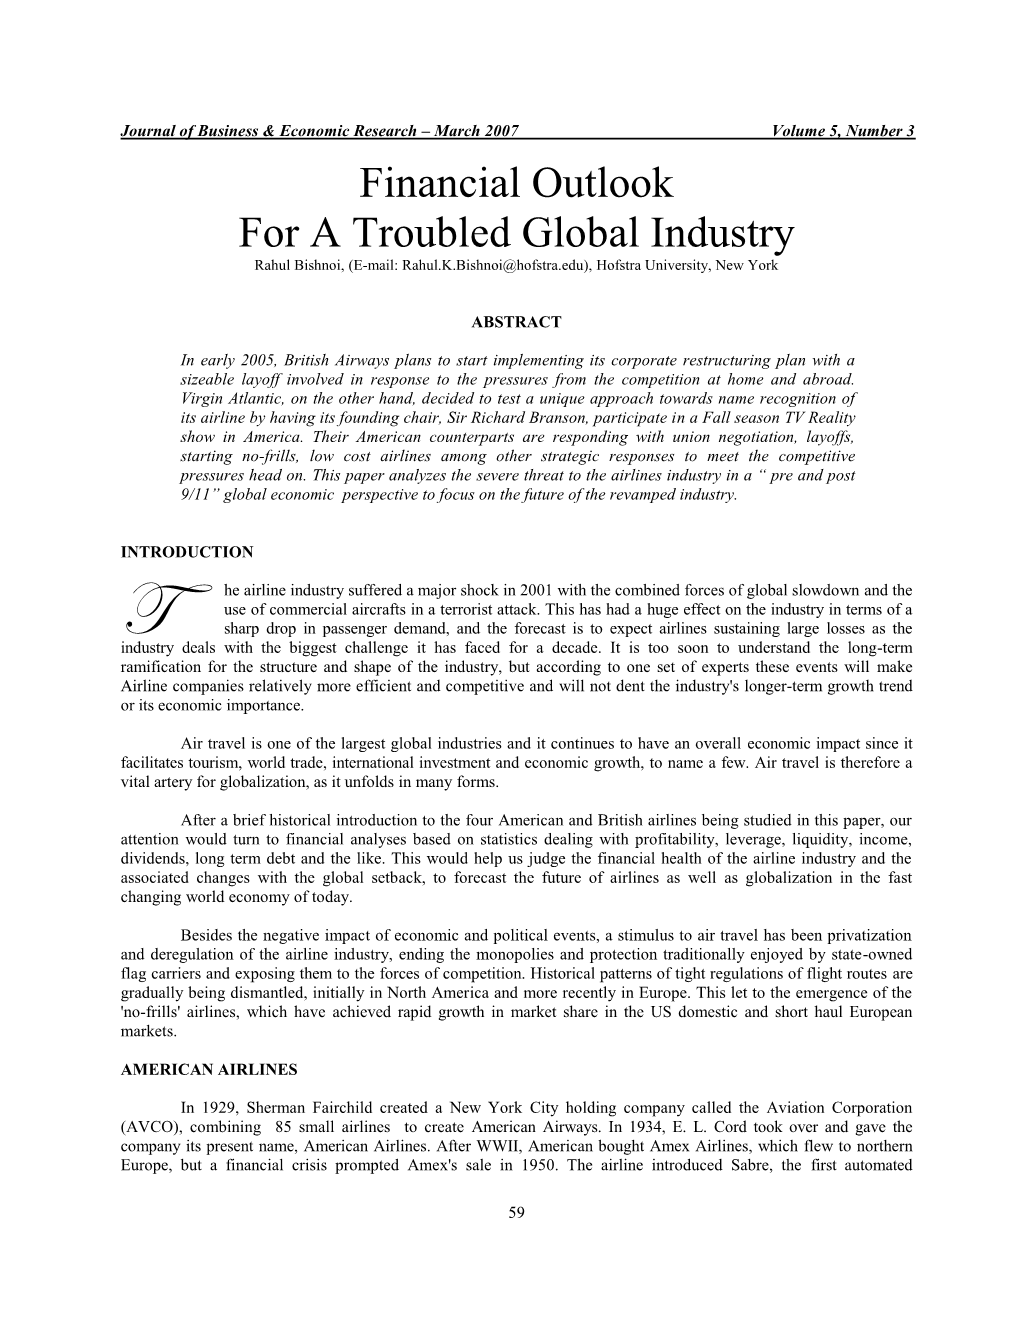 Financial Outlook for a Troubled Global Industry Rahul Bishnoi, (E-Mail: Rahul.K.Bishnoi@Hofstra.Edu), Hofstra University, New York